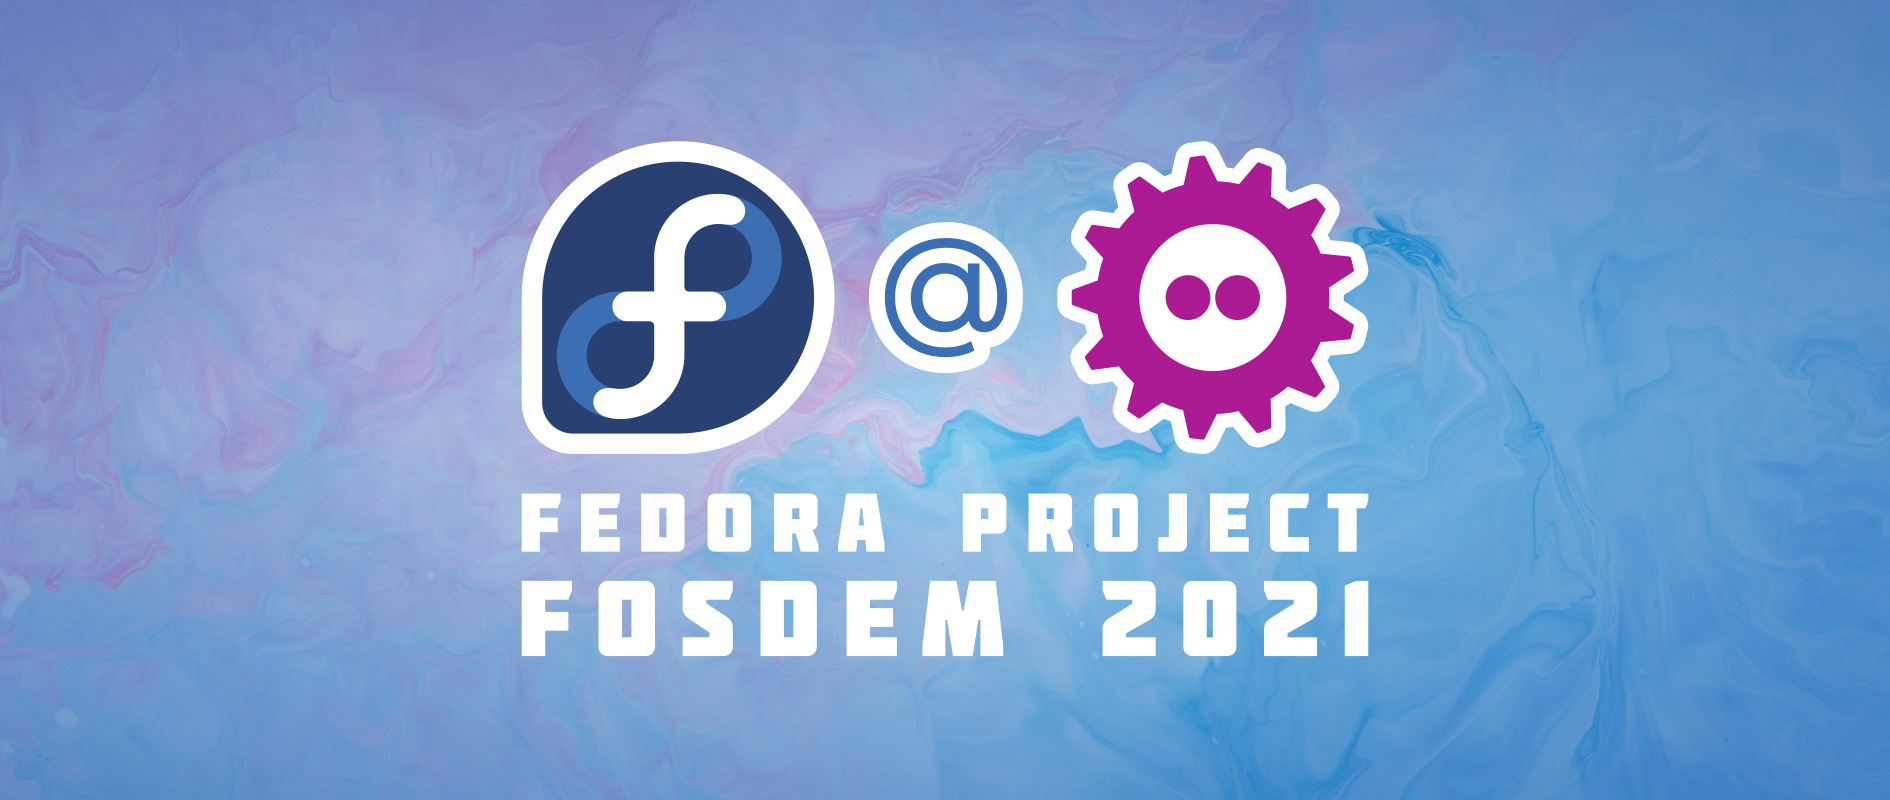 FOSDEM 2020 videos